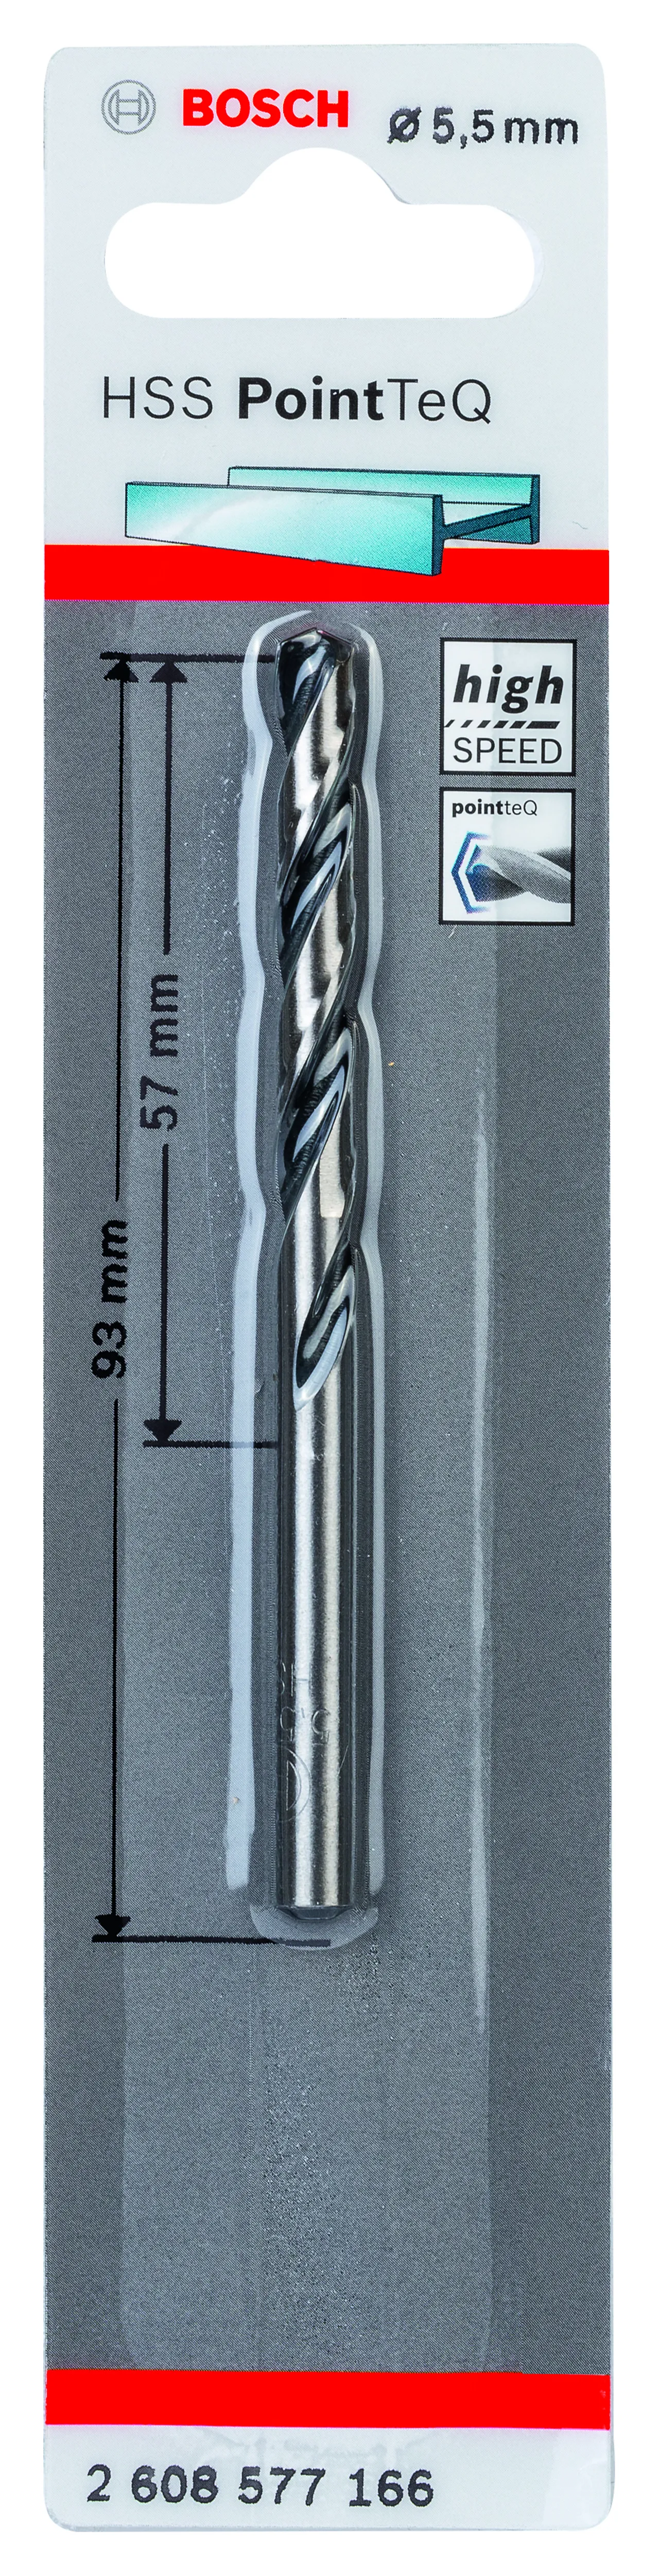 Metallbor pointtec hss-r 5,5mm bosch   n40